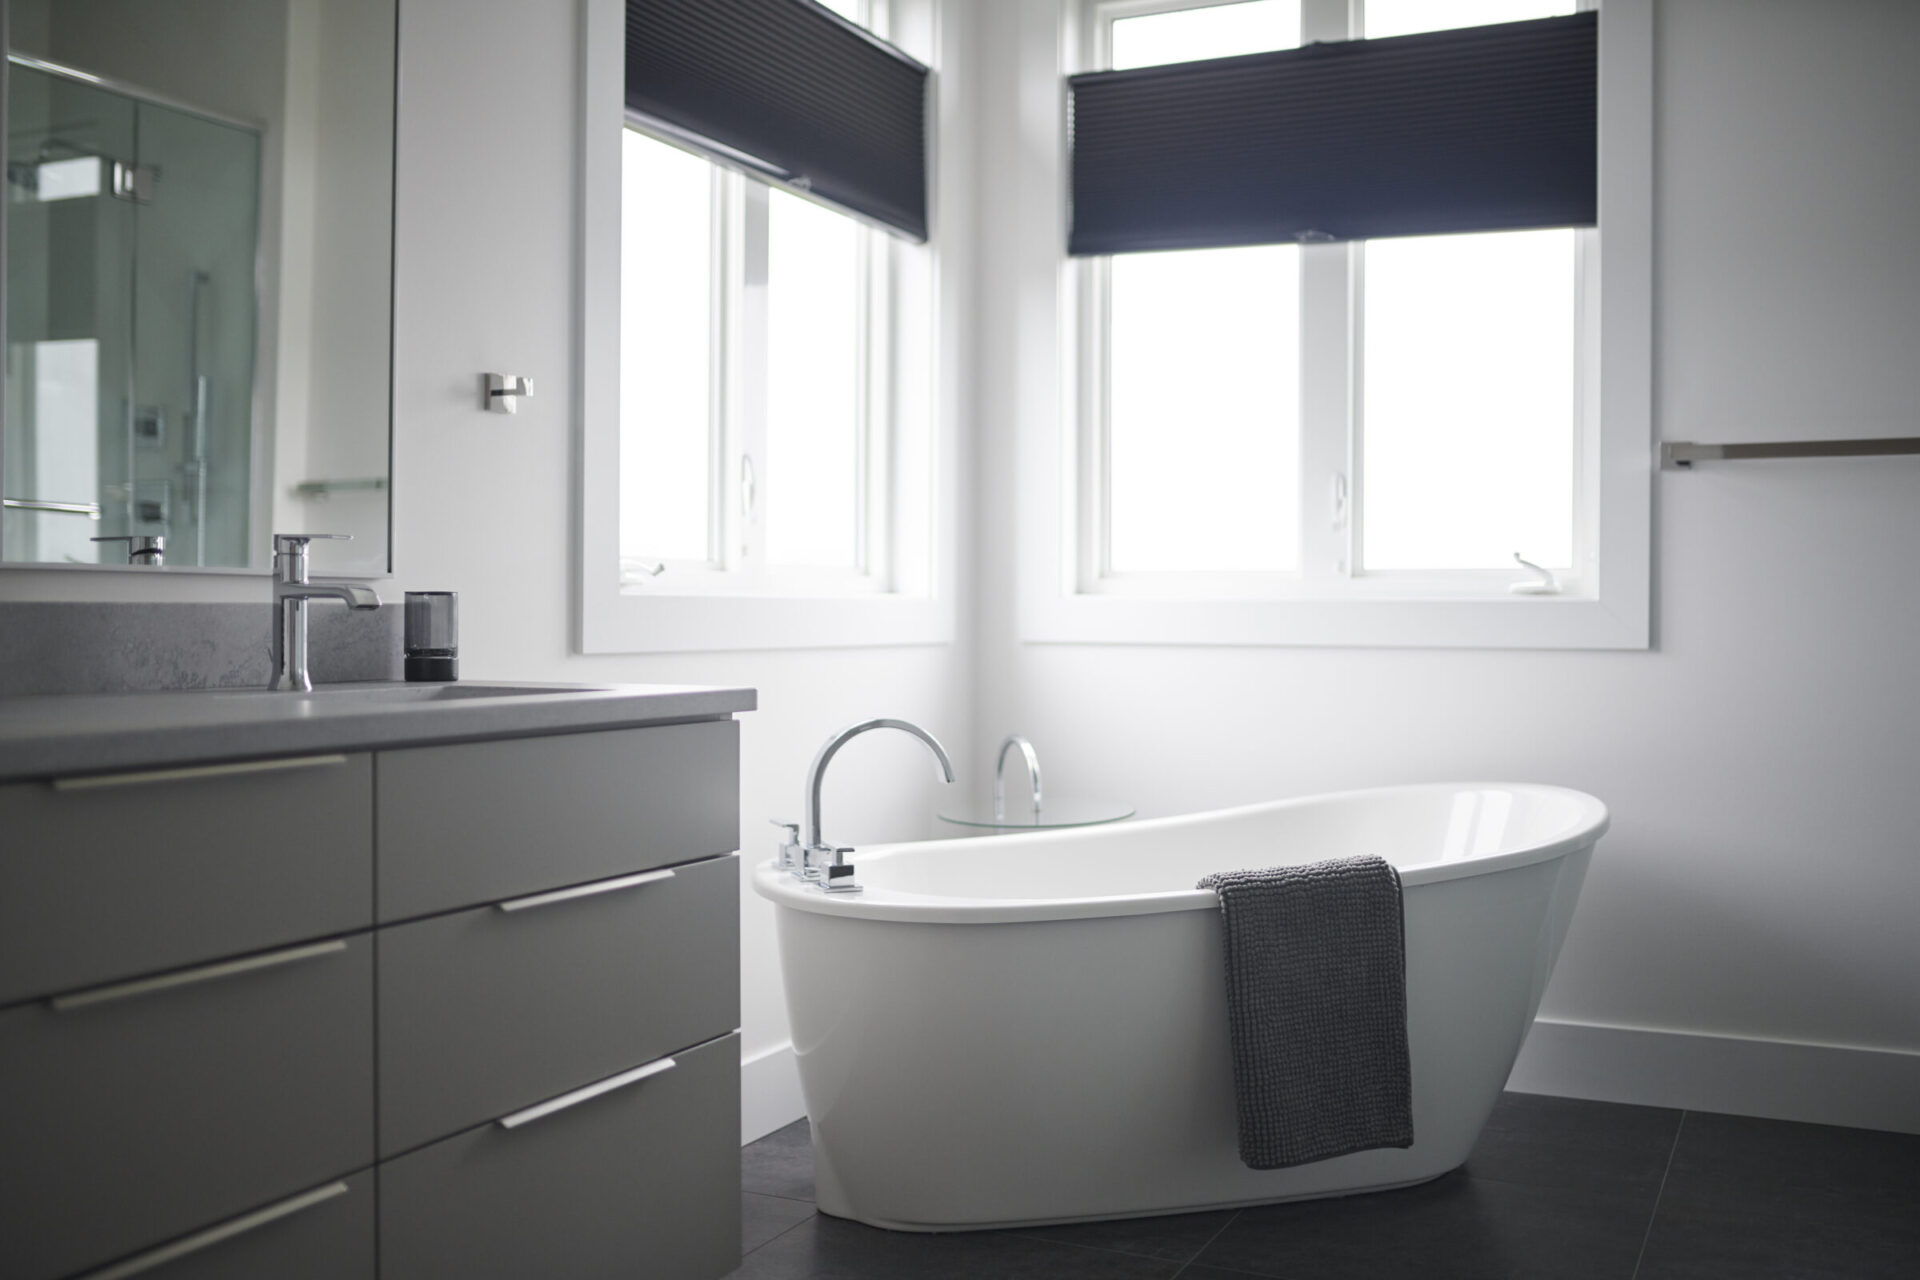 A modern bathroom with a freestanding bathtub, double sink vanity, dark grey floor, and dark blinds on the windows, in a clean, minimalist style.